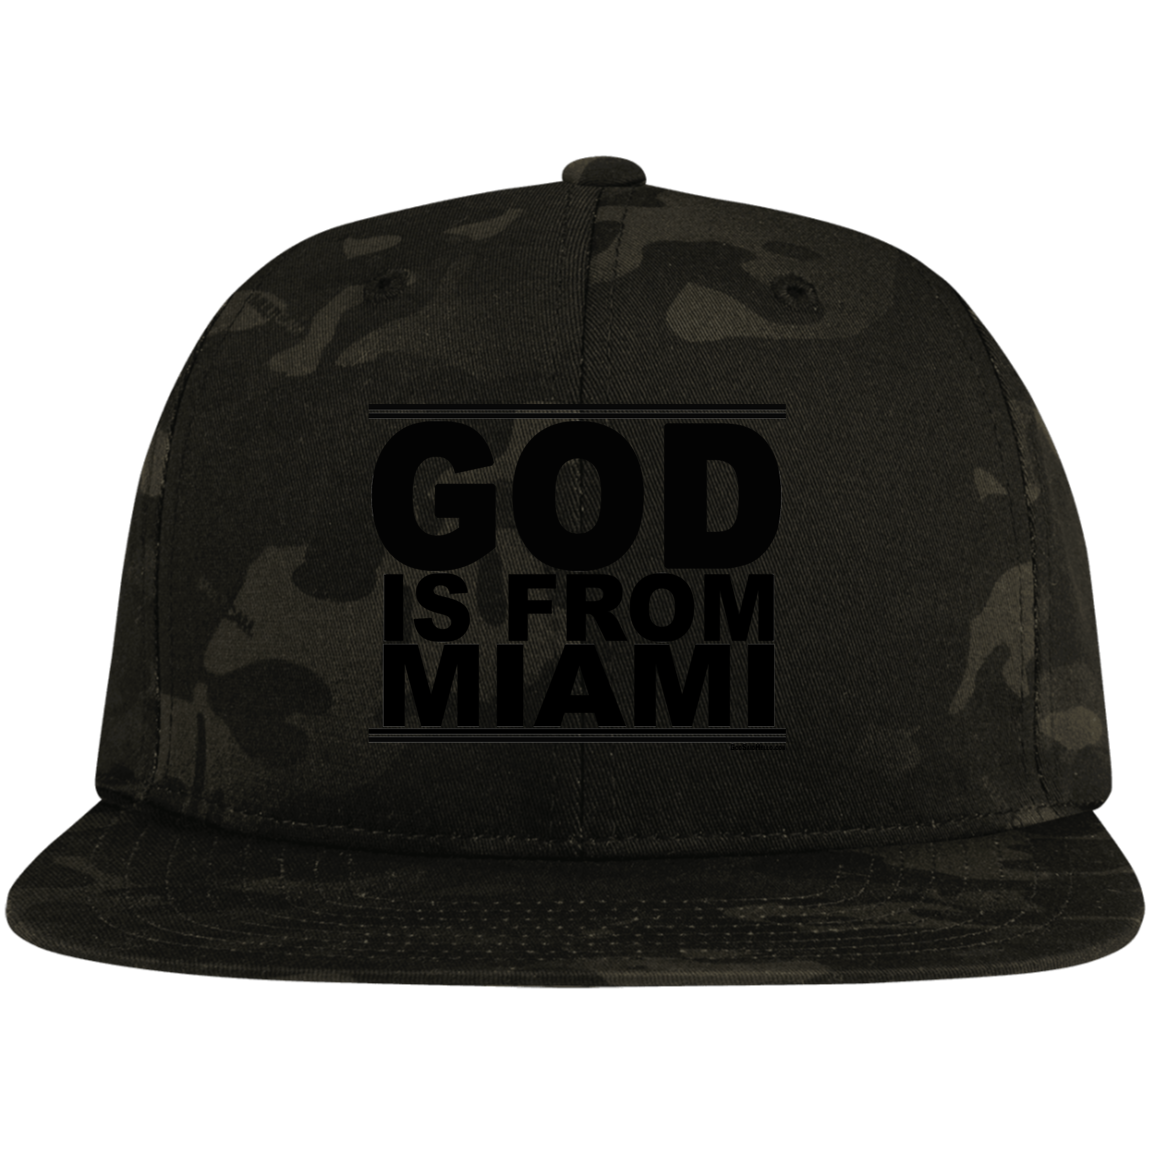 #GodIsFromMiami - Snapback Hat